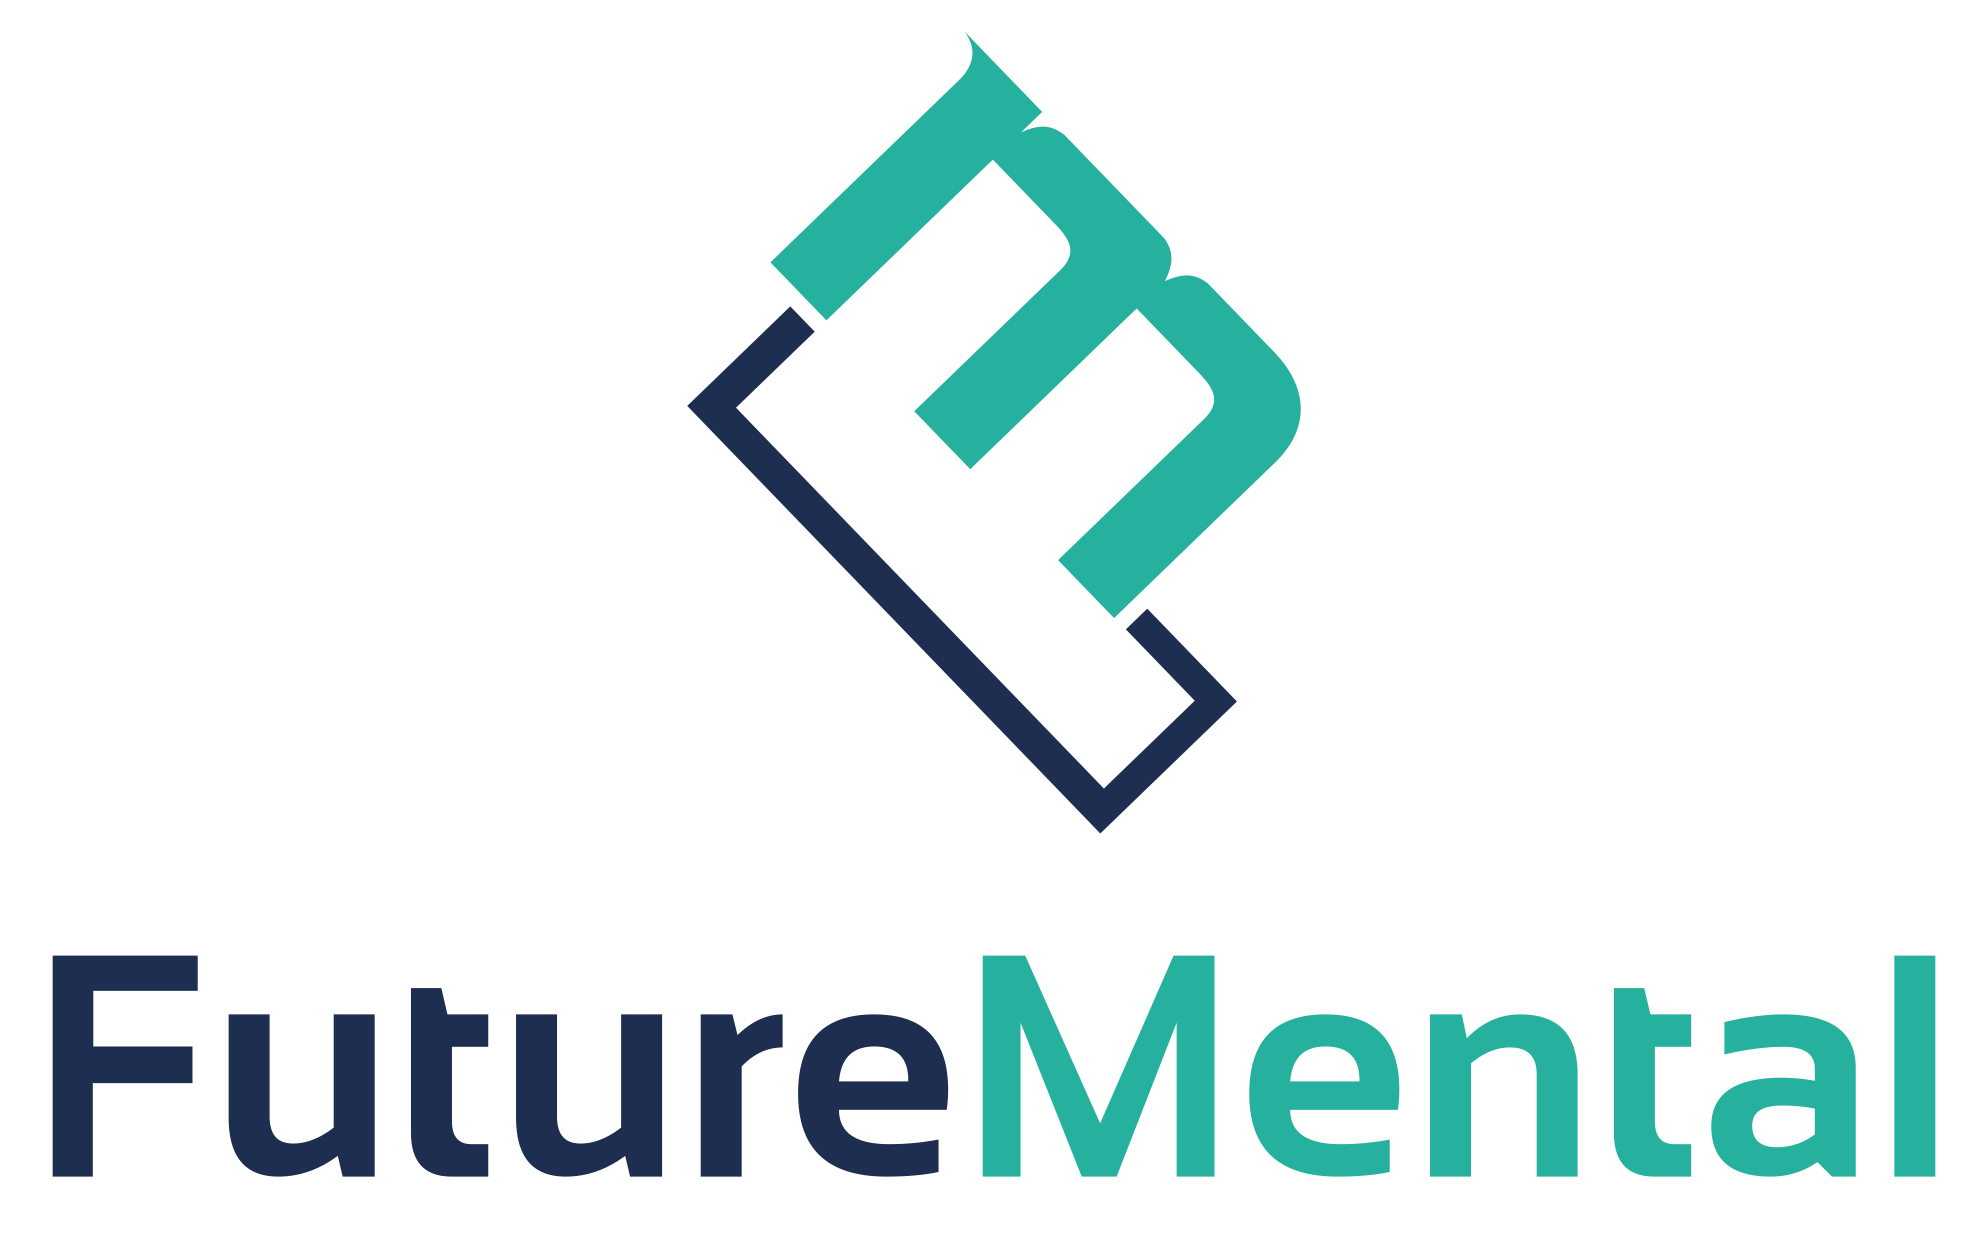 FutureMental